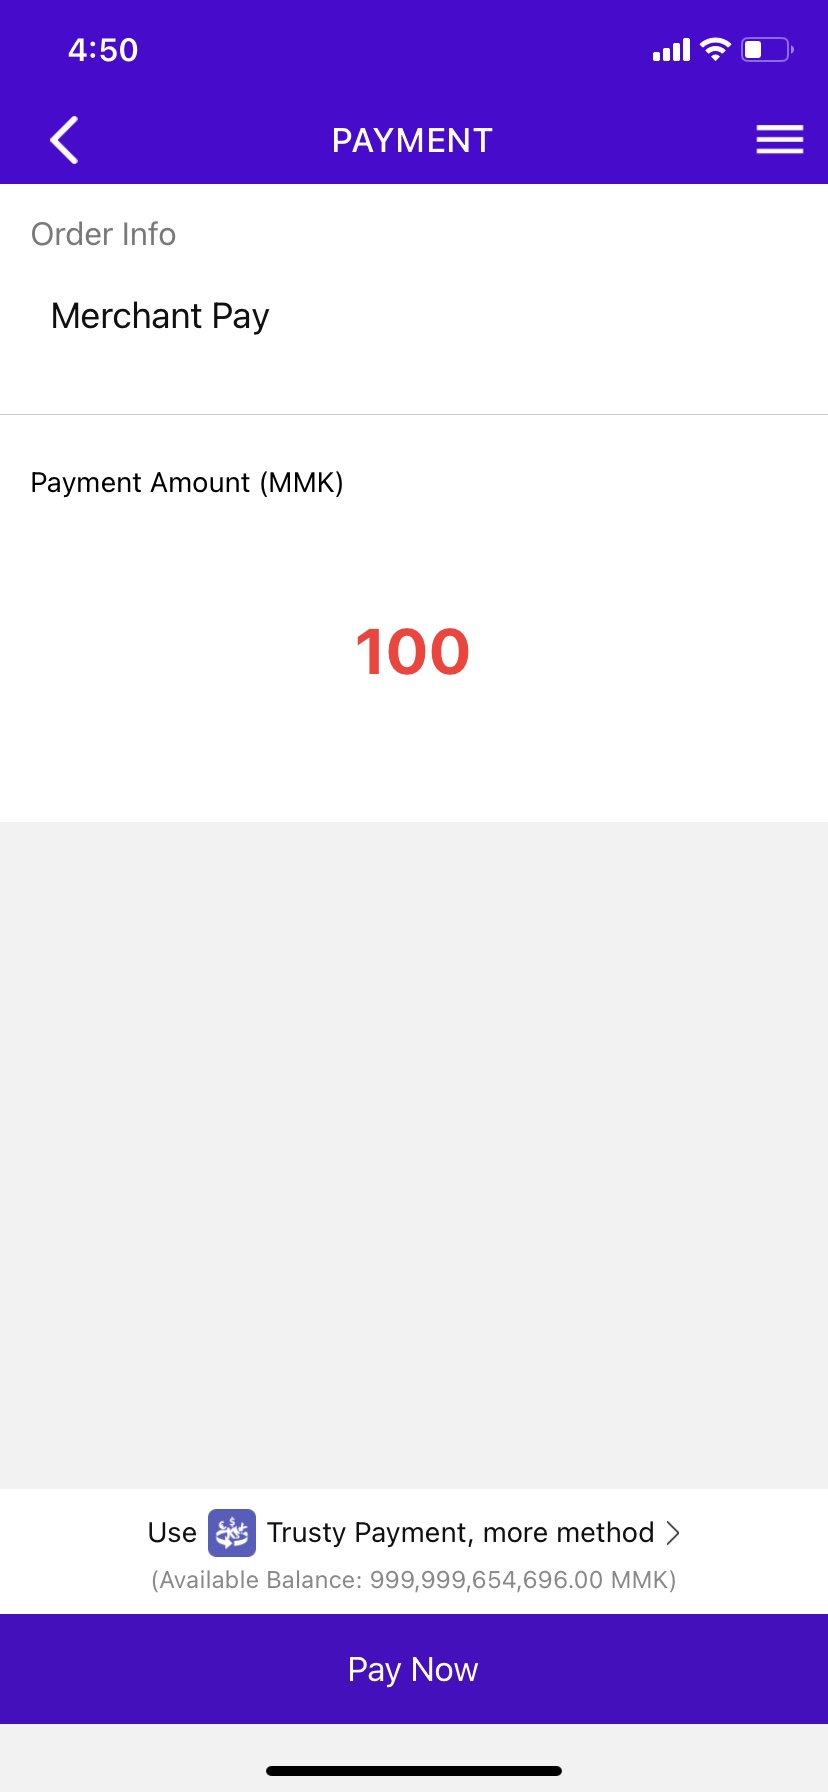 User enters transaction amount